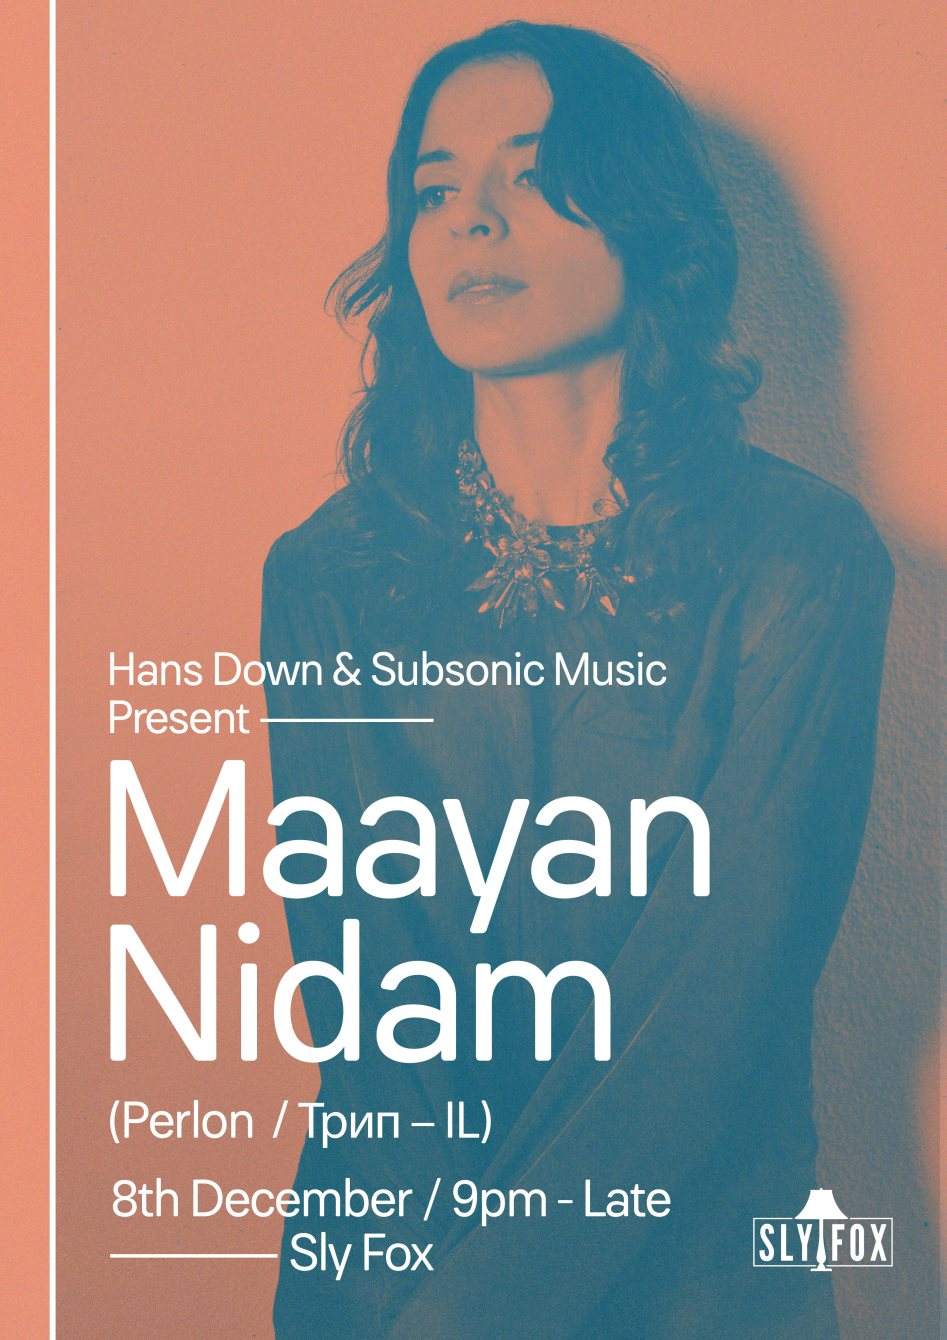 Hans Down & Subsonic Music present Maayan Nidam - Página trasera